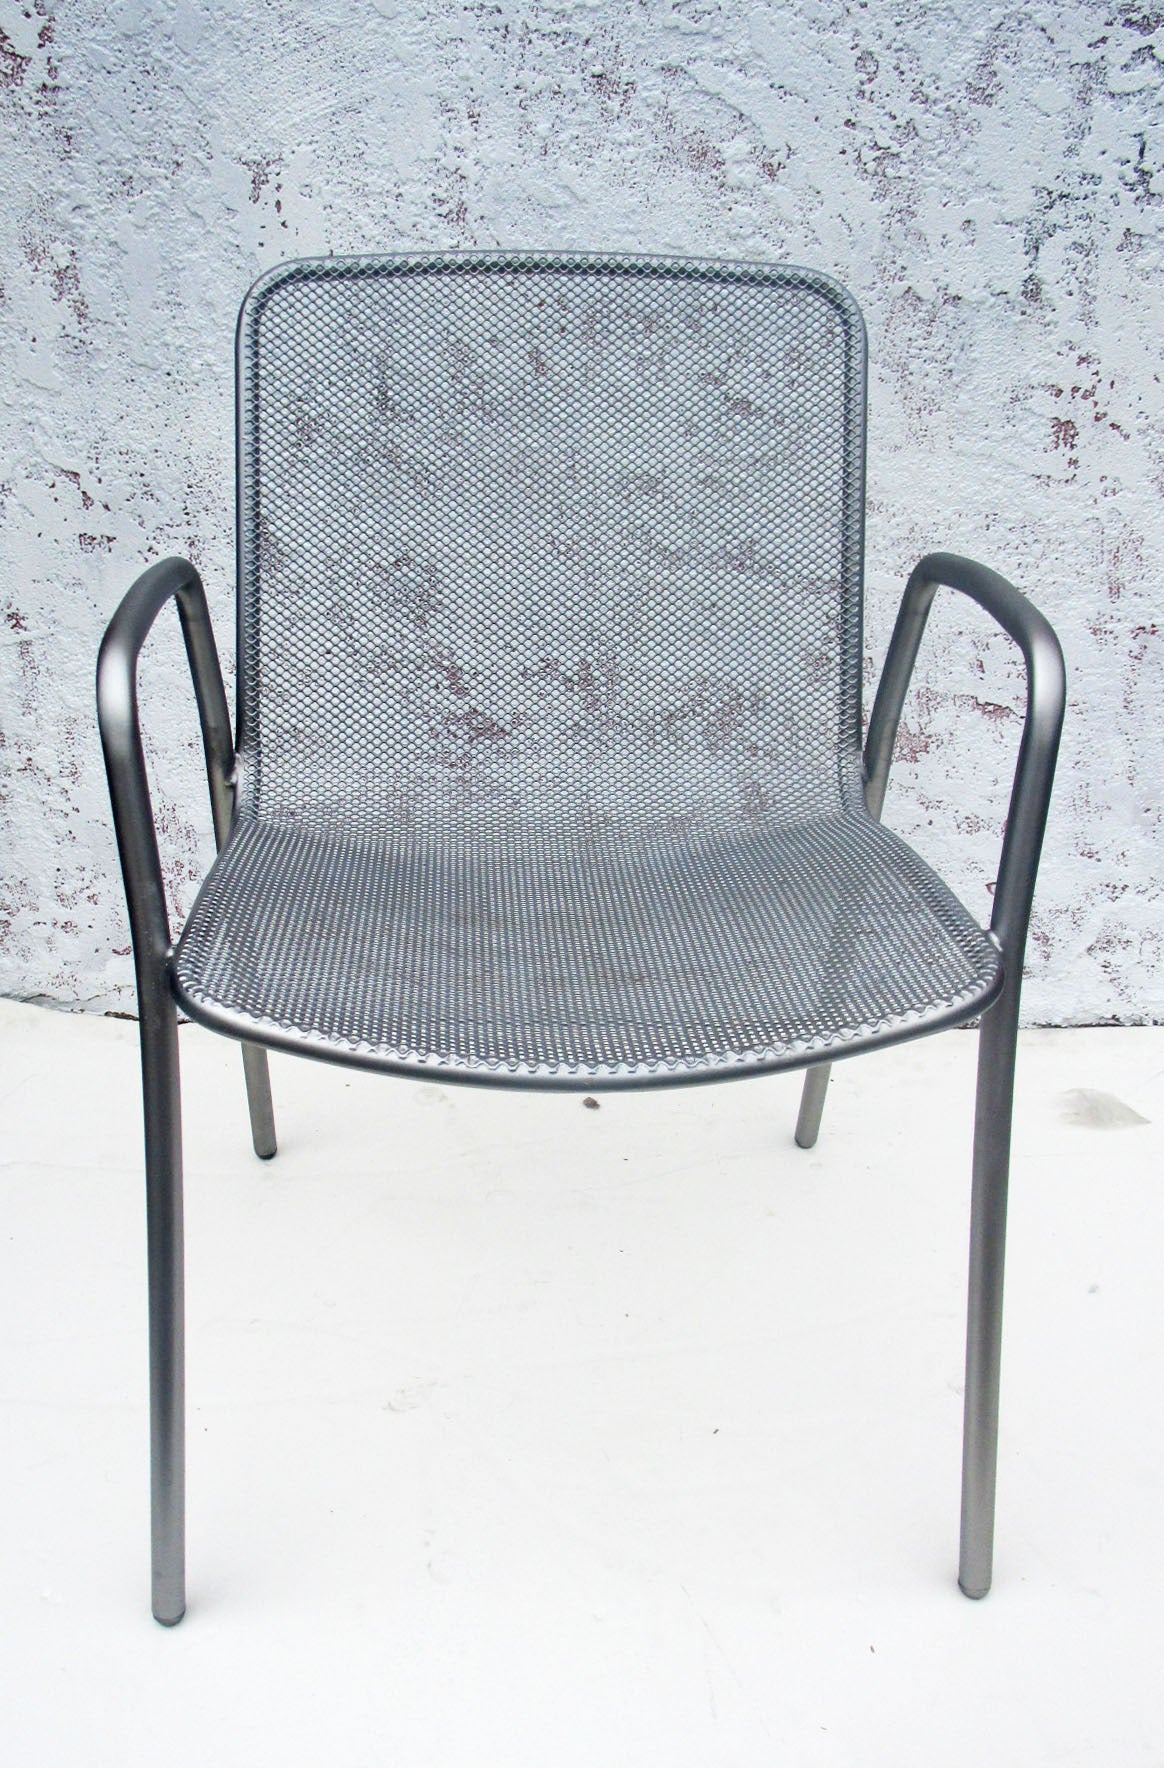 Lightweight mesh aluminum Chairs.